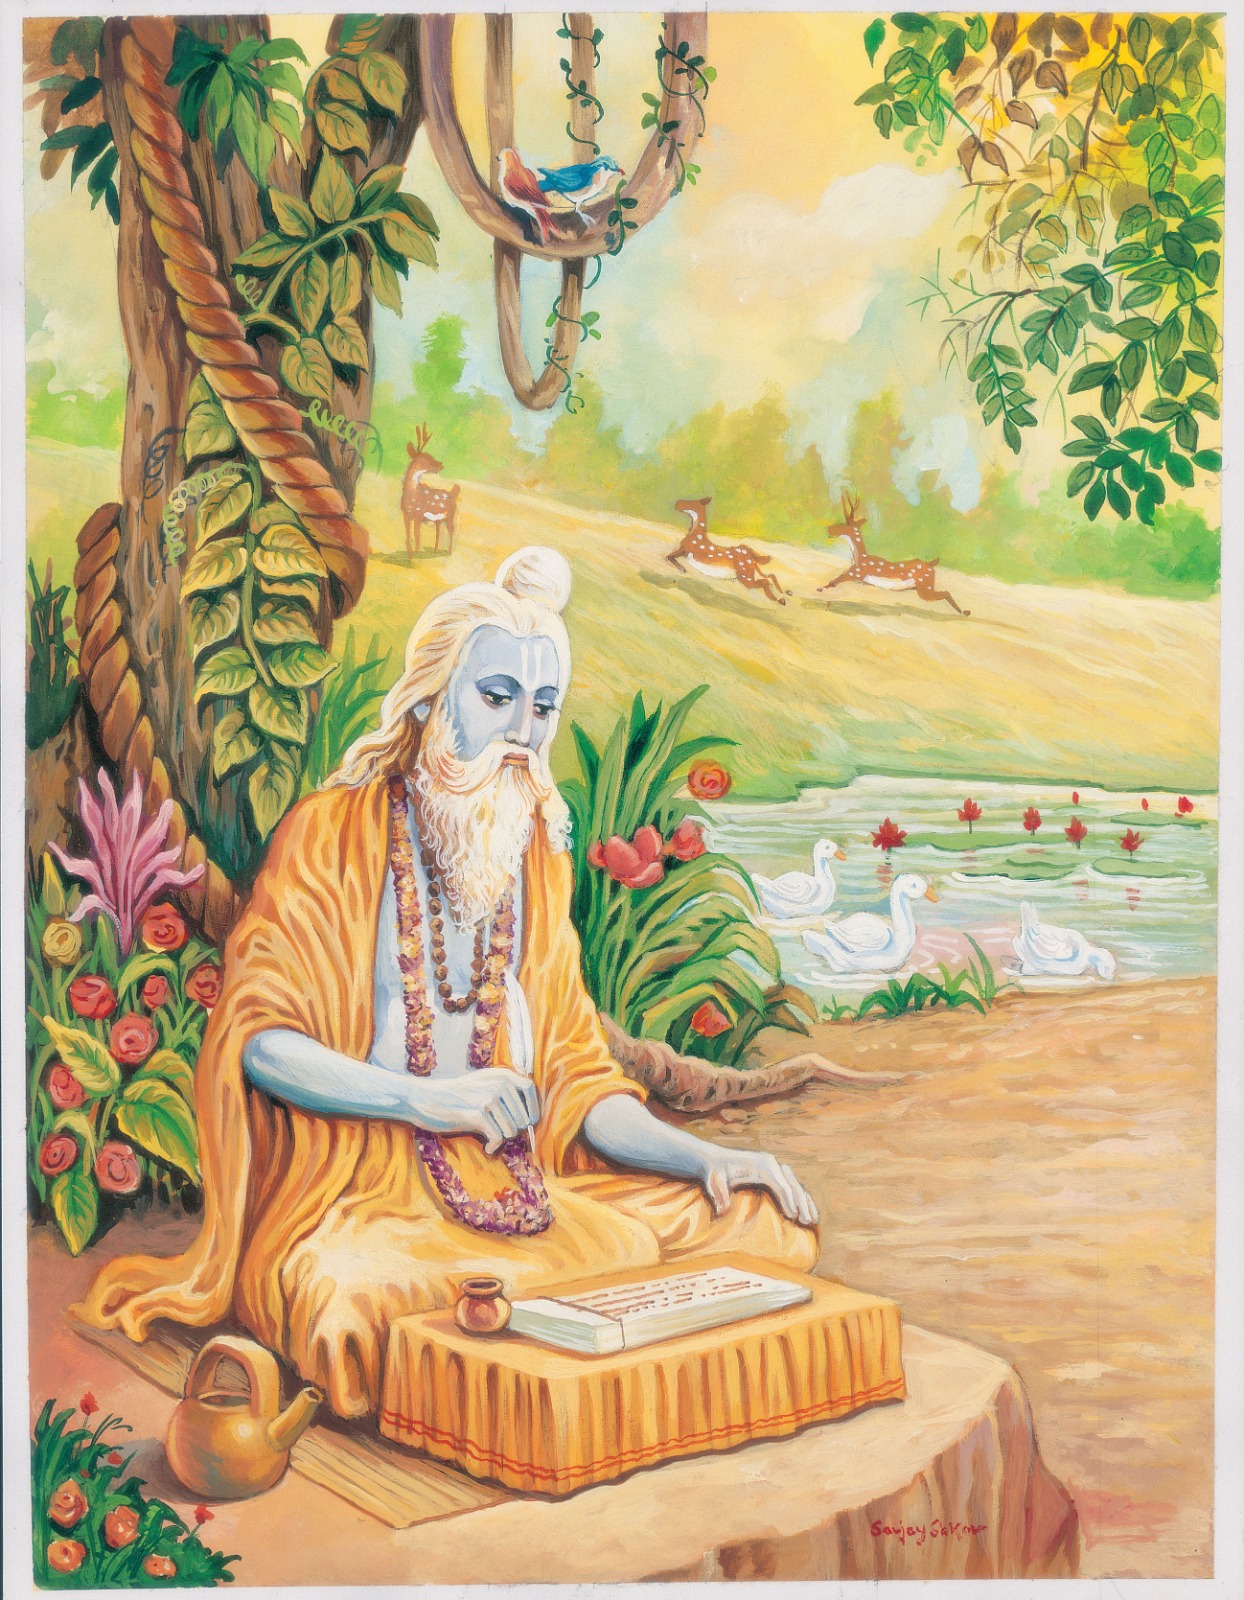 Bhagavad Gita by Swami Mukundananda, Chapter జ్ఞాన విజ్ఞాన యోగము